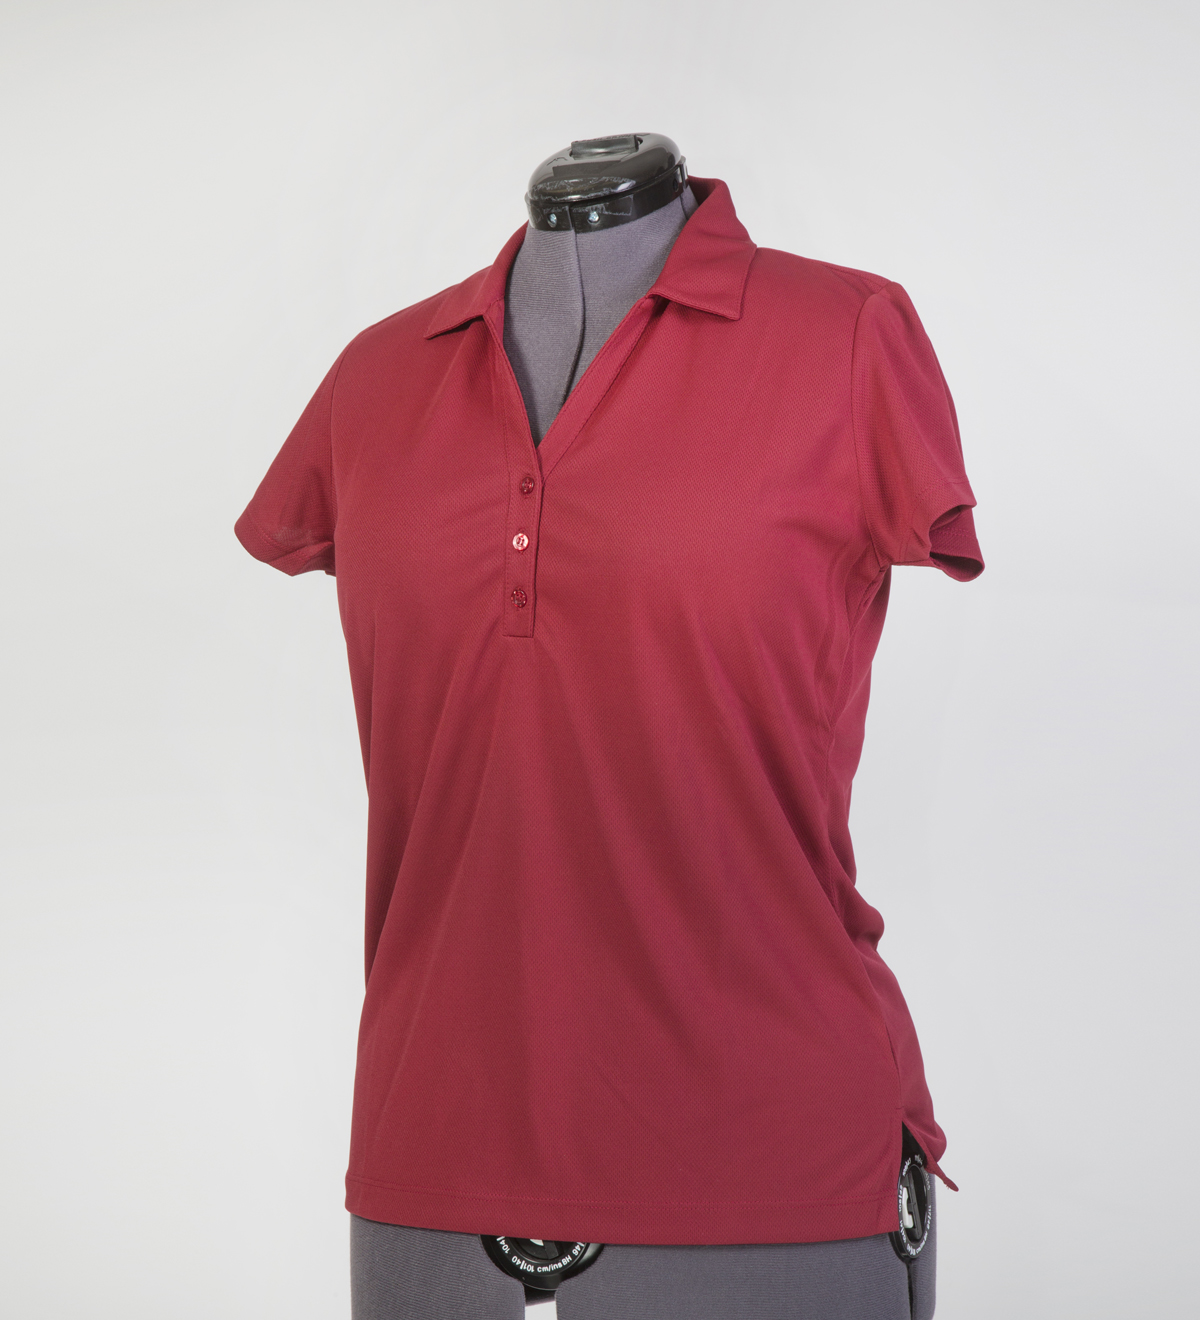 Women’s Polo – Dri-Fit – Shirts Unlimited